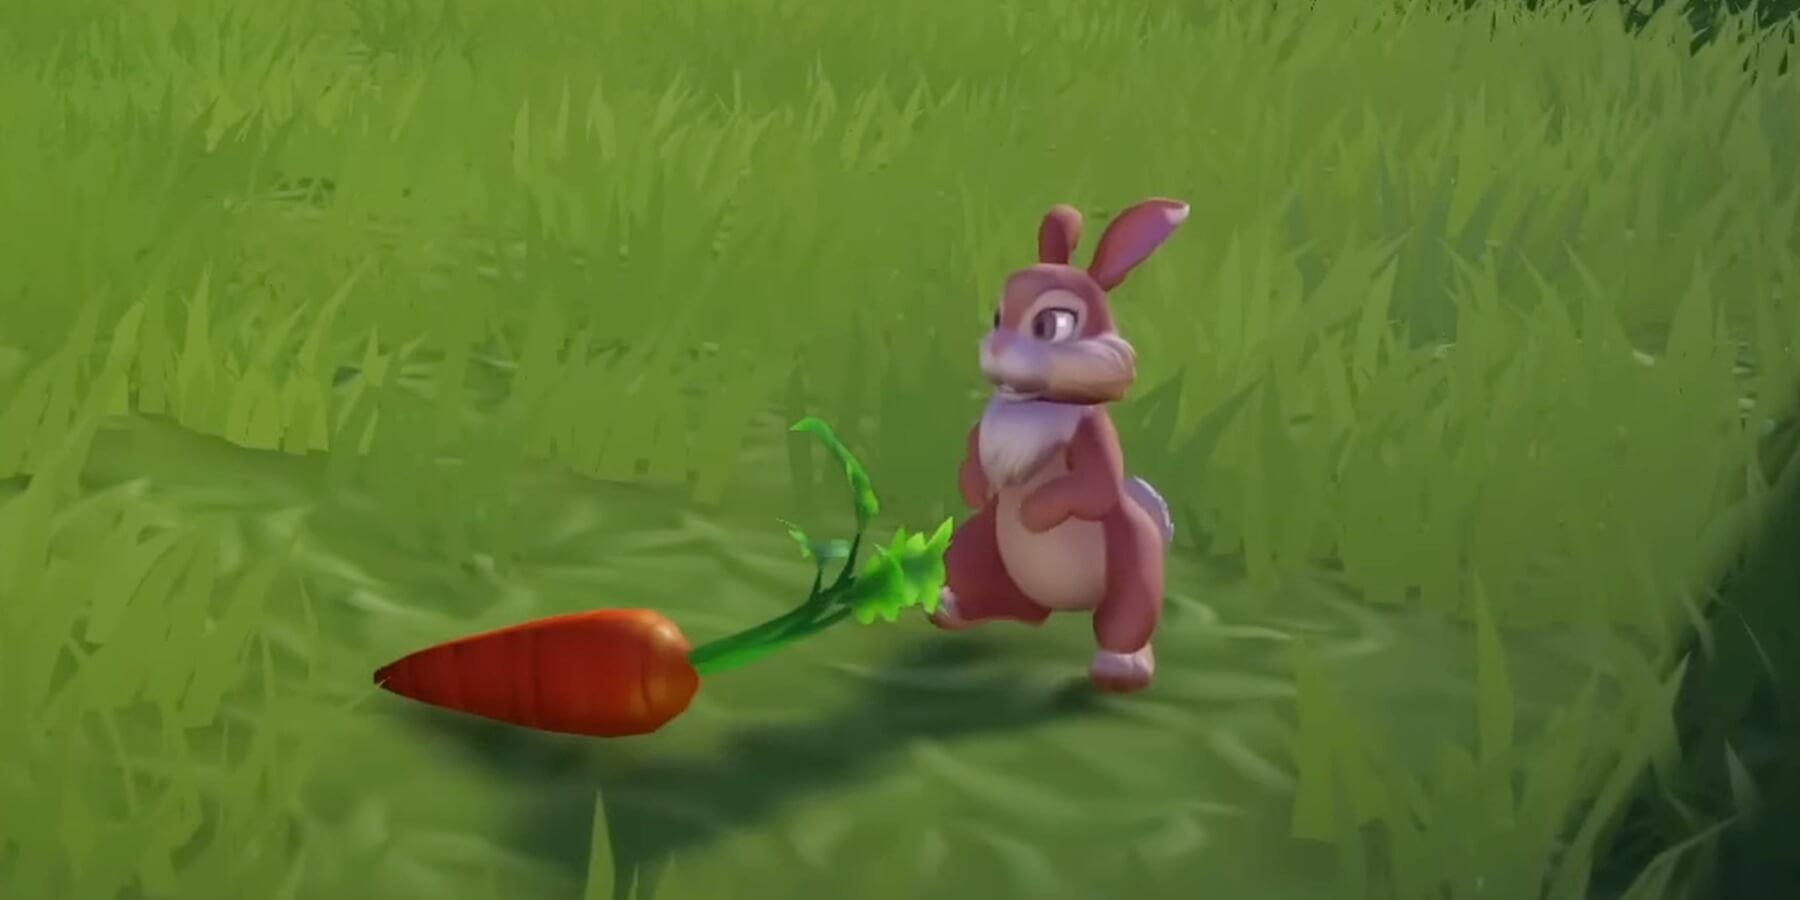 disney dreamlight valley rabbit with carrot (1)